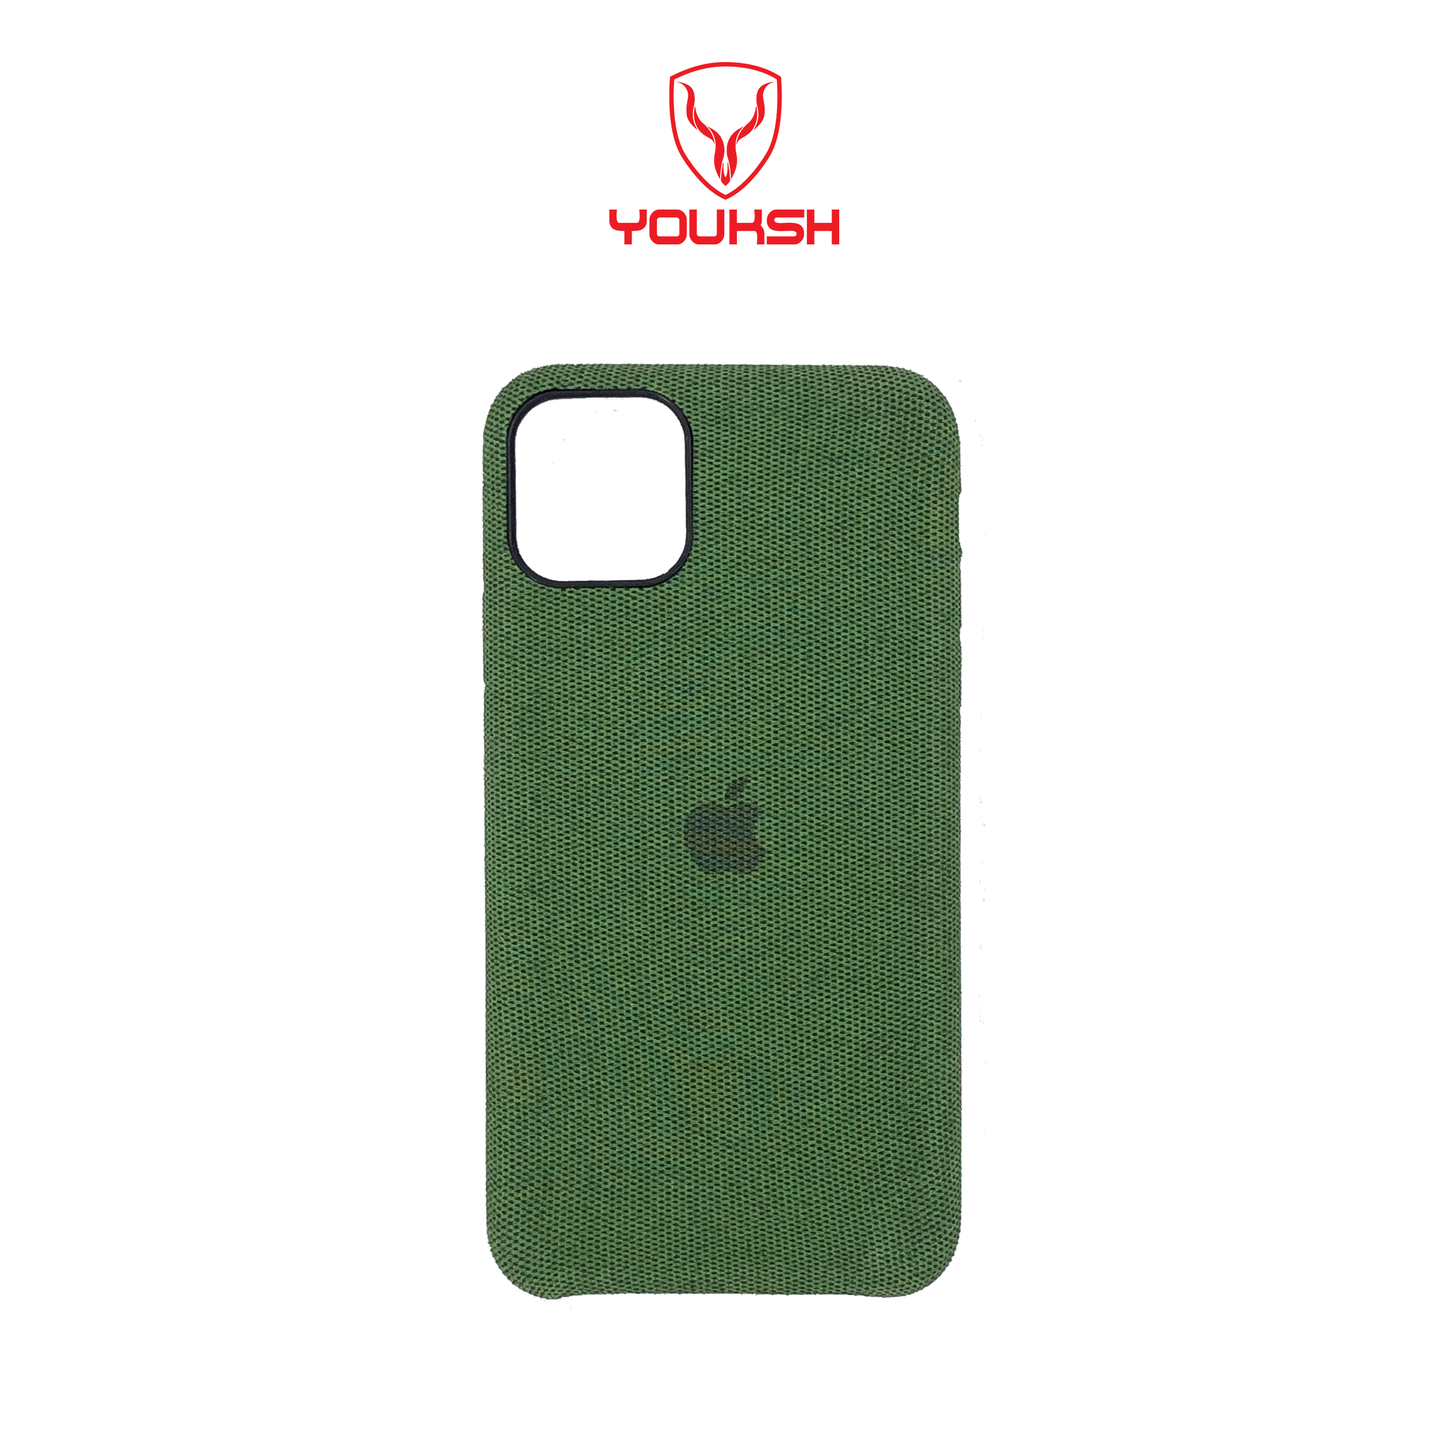 Apple iphone 12 Pro - Youksh Canvas Case - Hot Popular Phone Case.